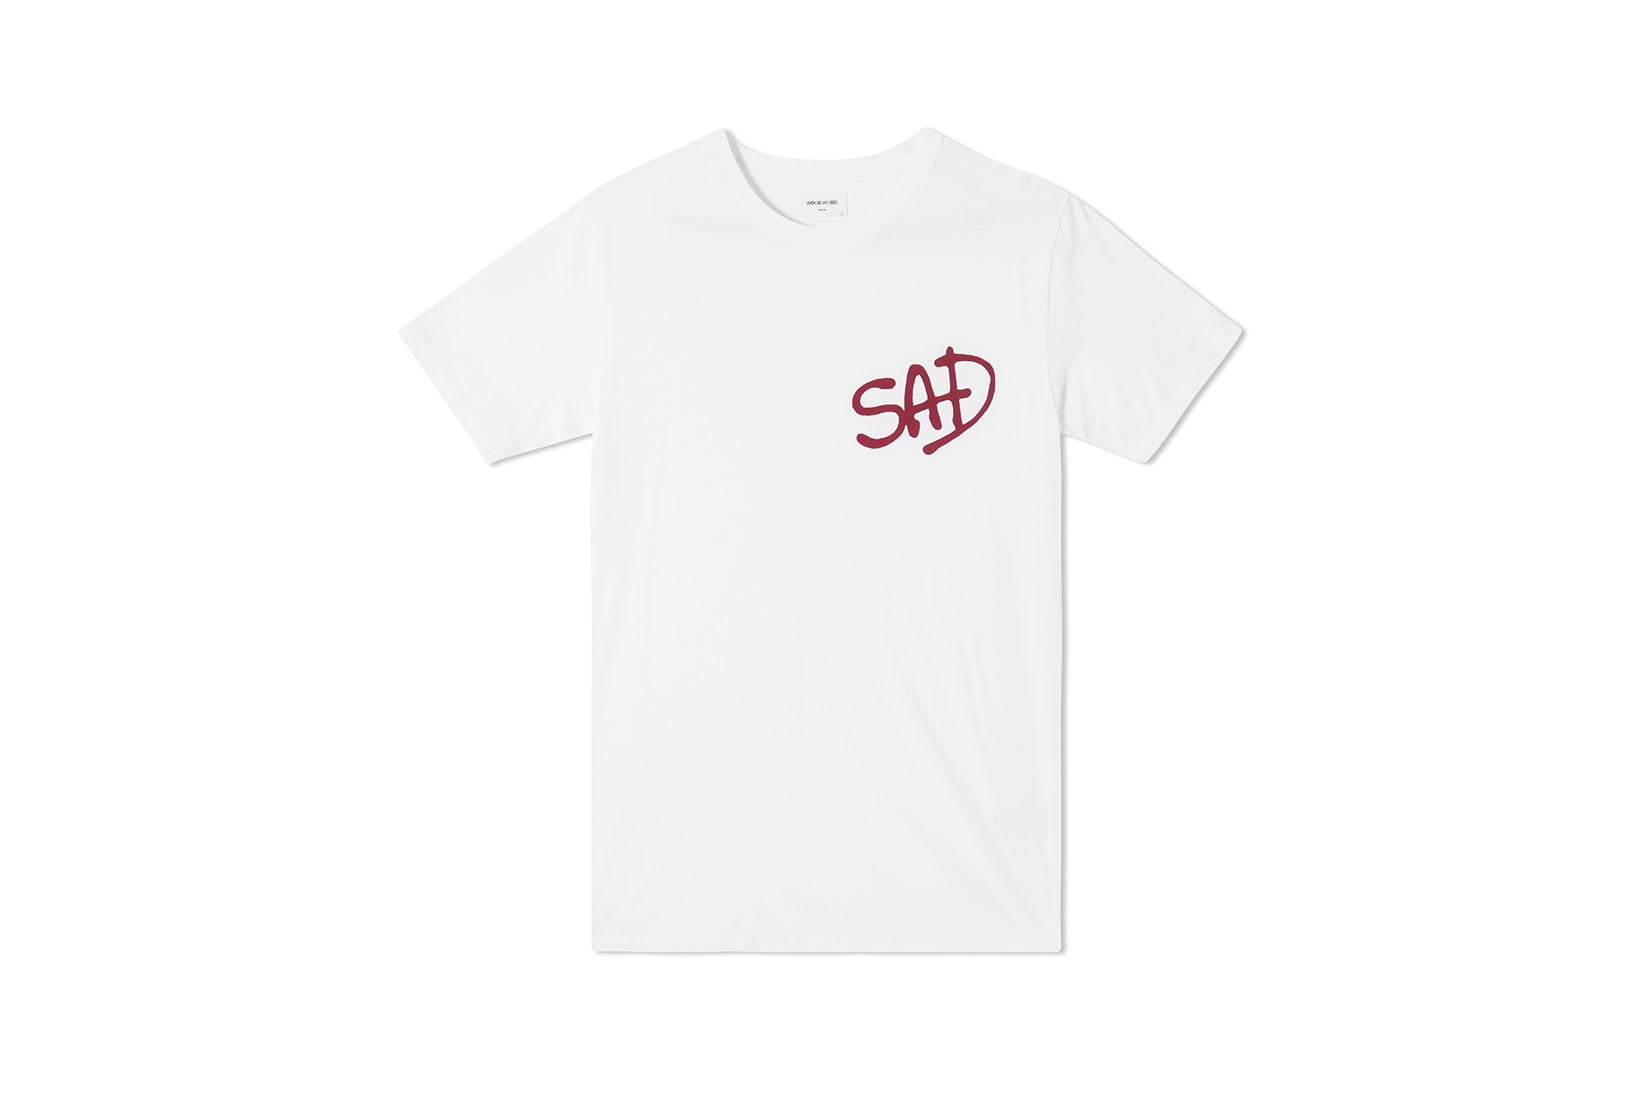 Wood Wood Michael Jackson Fall/Winter 2018 Bad Sad T-shirt Sweatshirt Long Sleeve Lighter Cap Badge First Look Buy Purchase